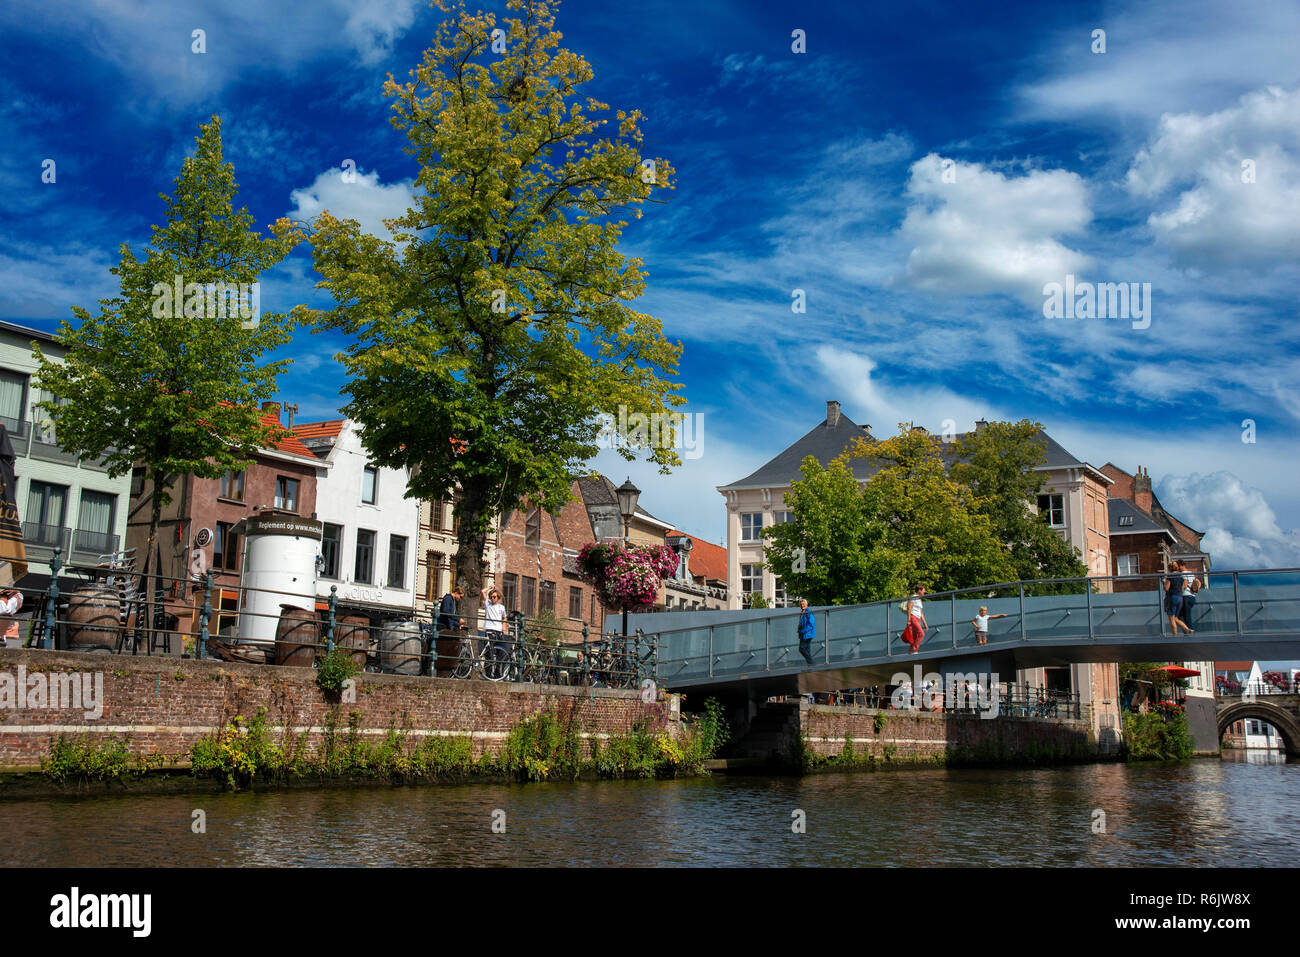 Boat trip in the Dijle River, Mechelen, Belgium. Romantic houses facade. Stock Photo